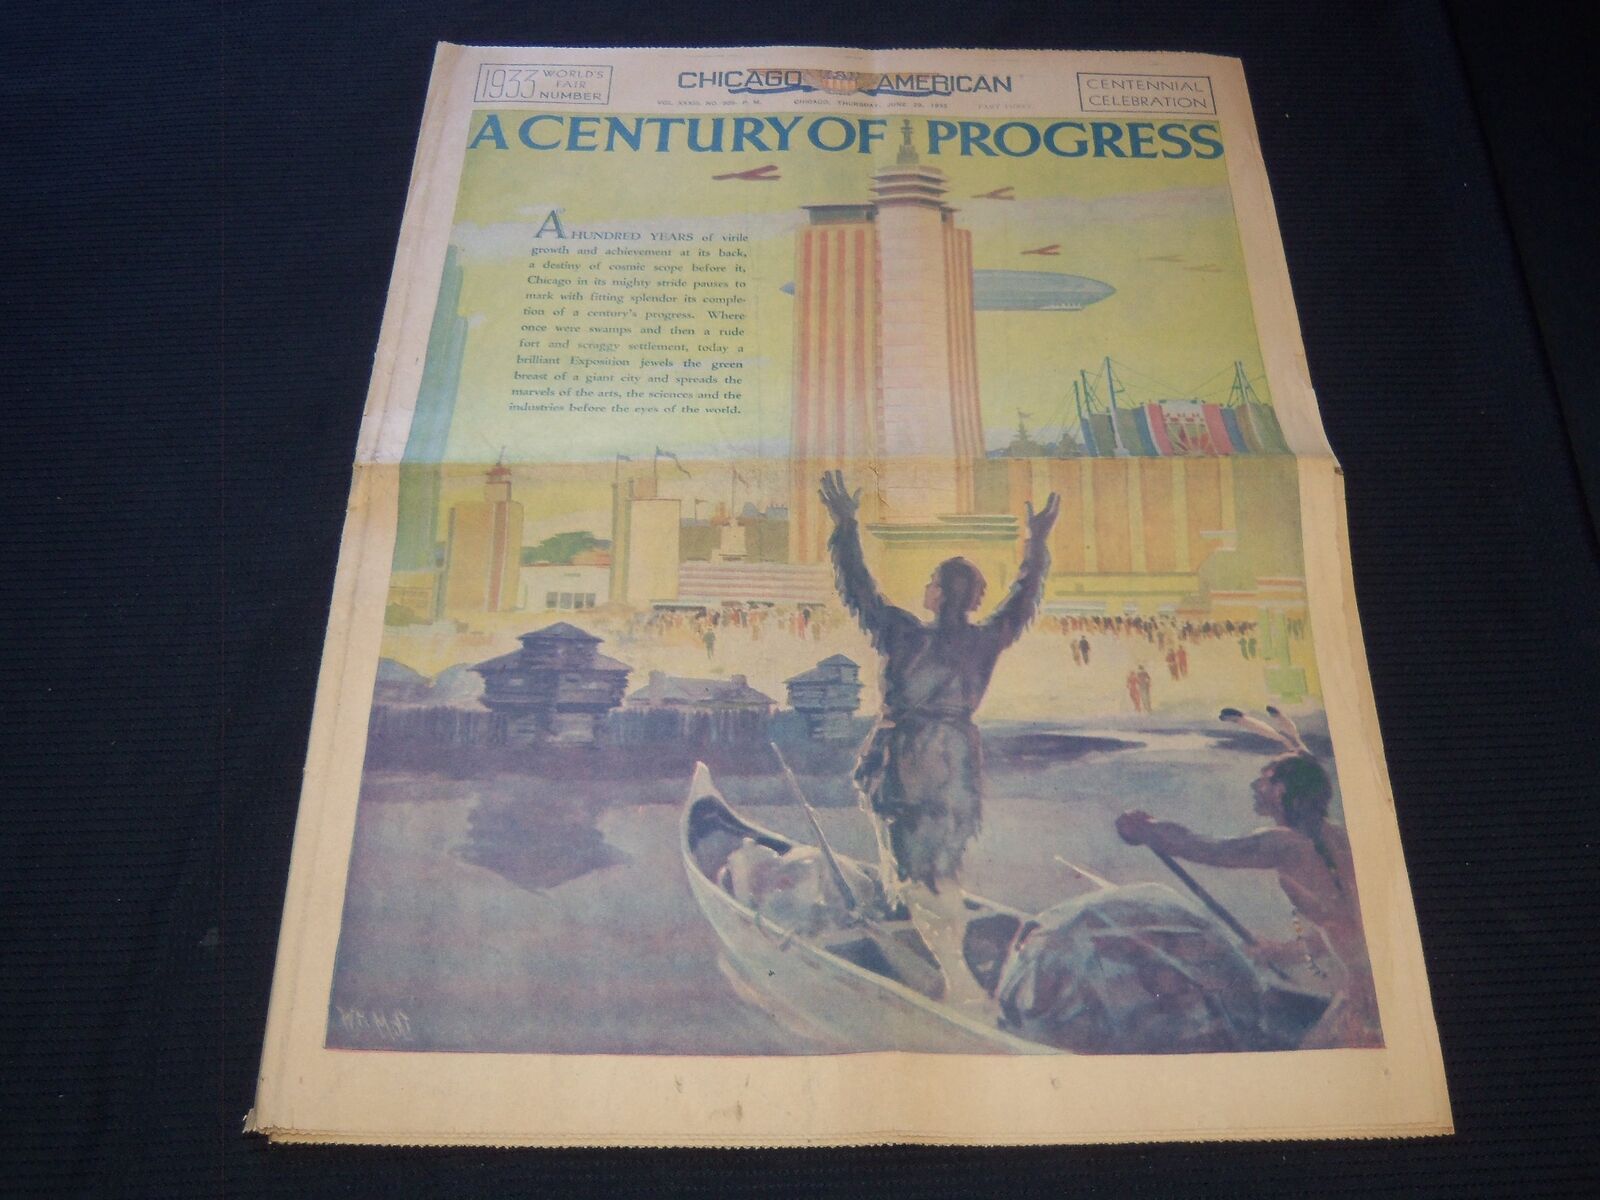 1933 JUNE 29 CHICAGO AMERICAN NEWSPAPER - A CENTURY OF PROGRESS - NP 5825